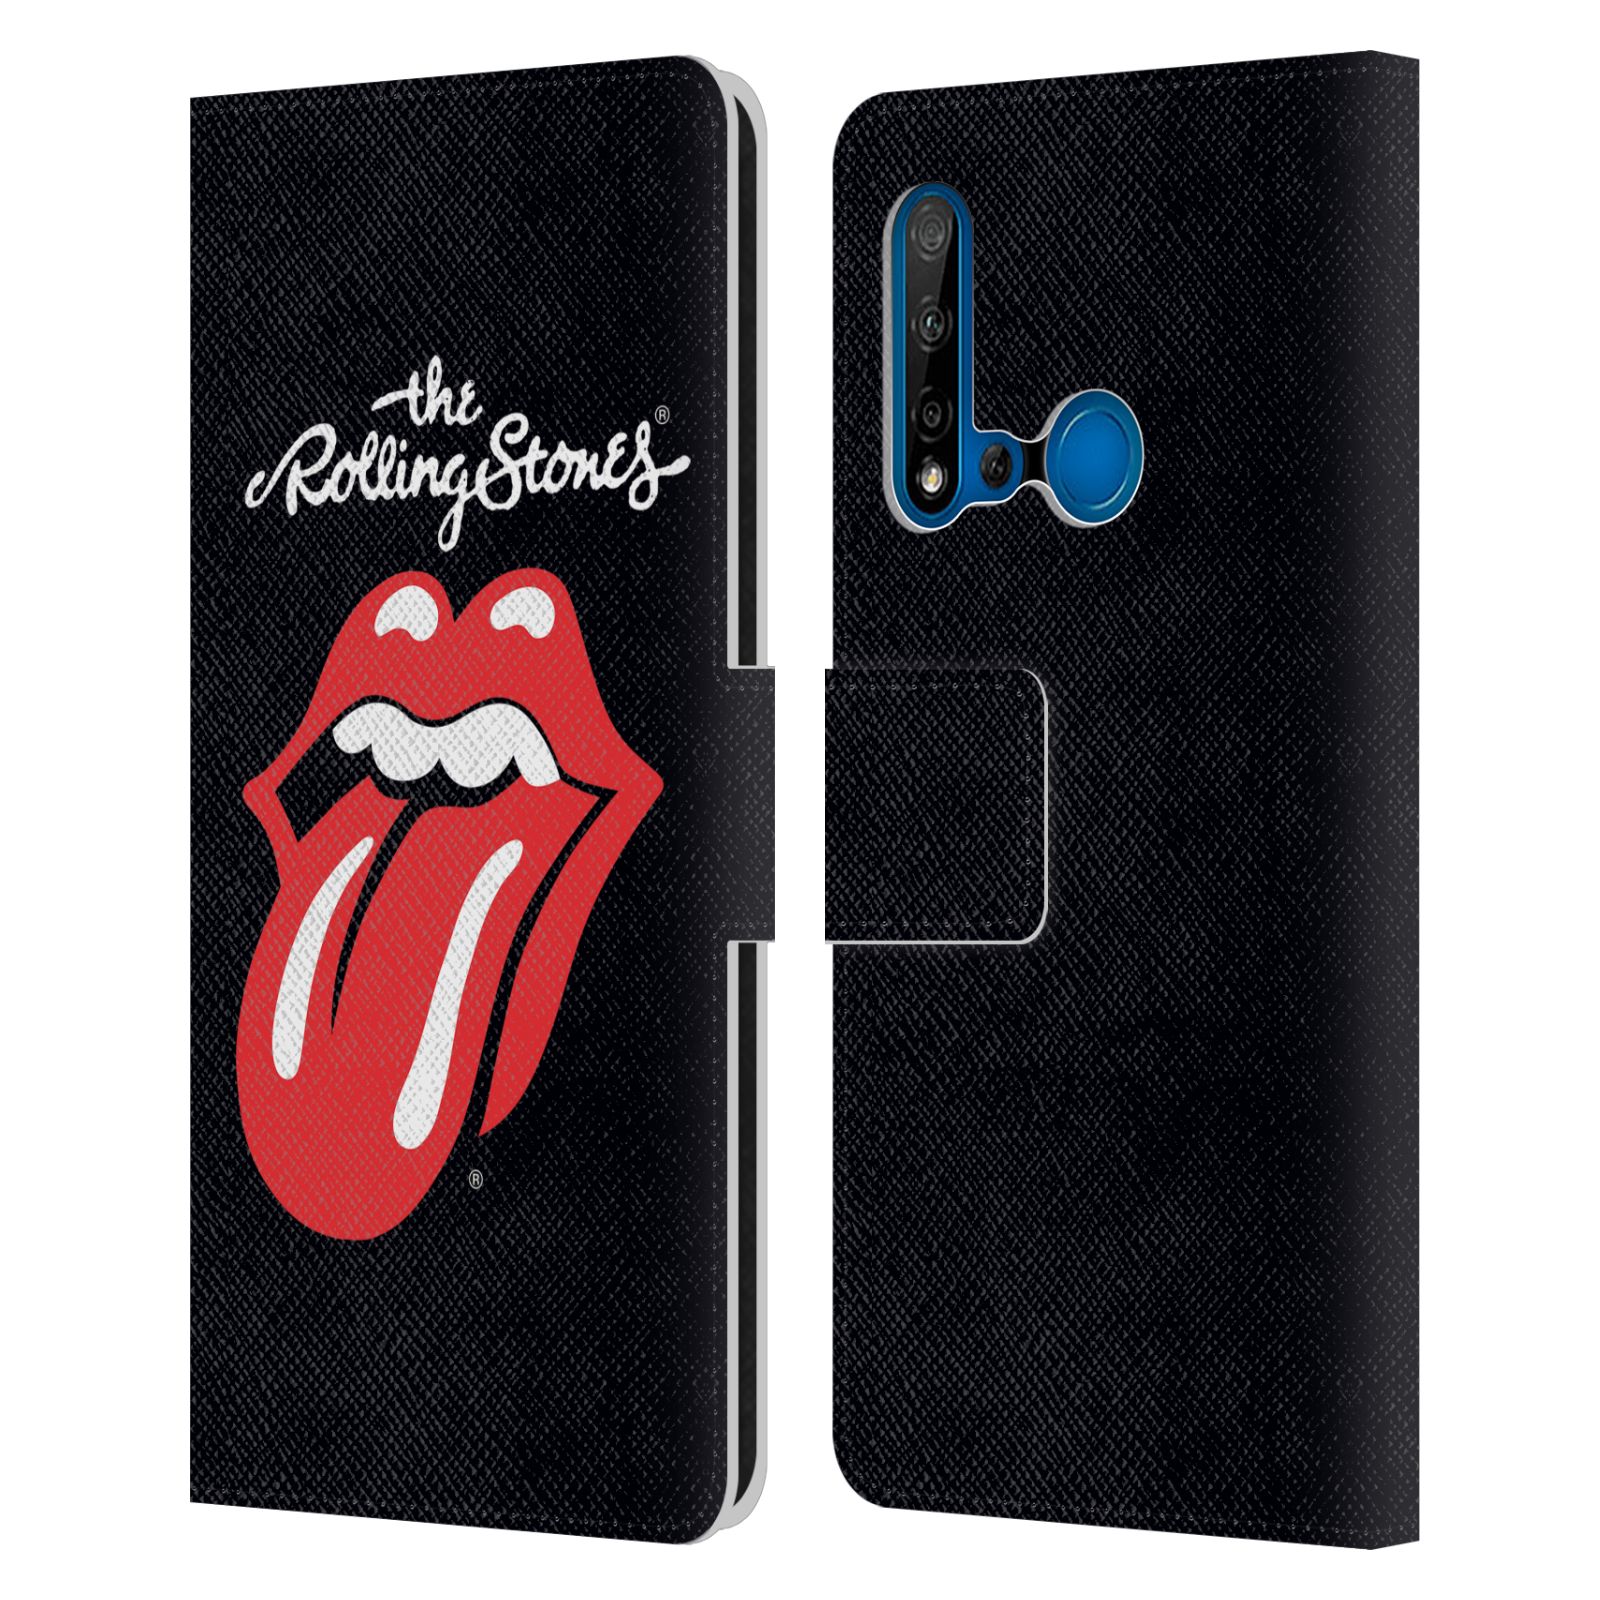 Pouzdro na mobil Huawei P20 LITE 2019 - Head Case - Rolling Stones - Logo černé pozadí